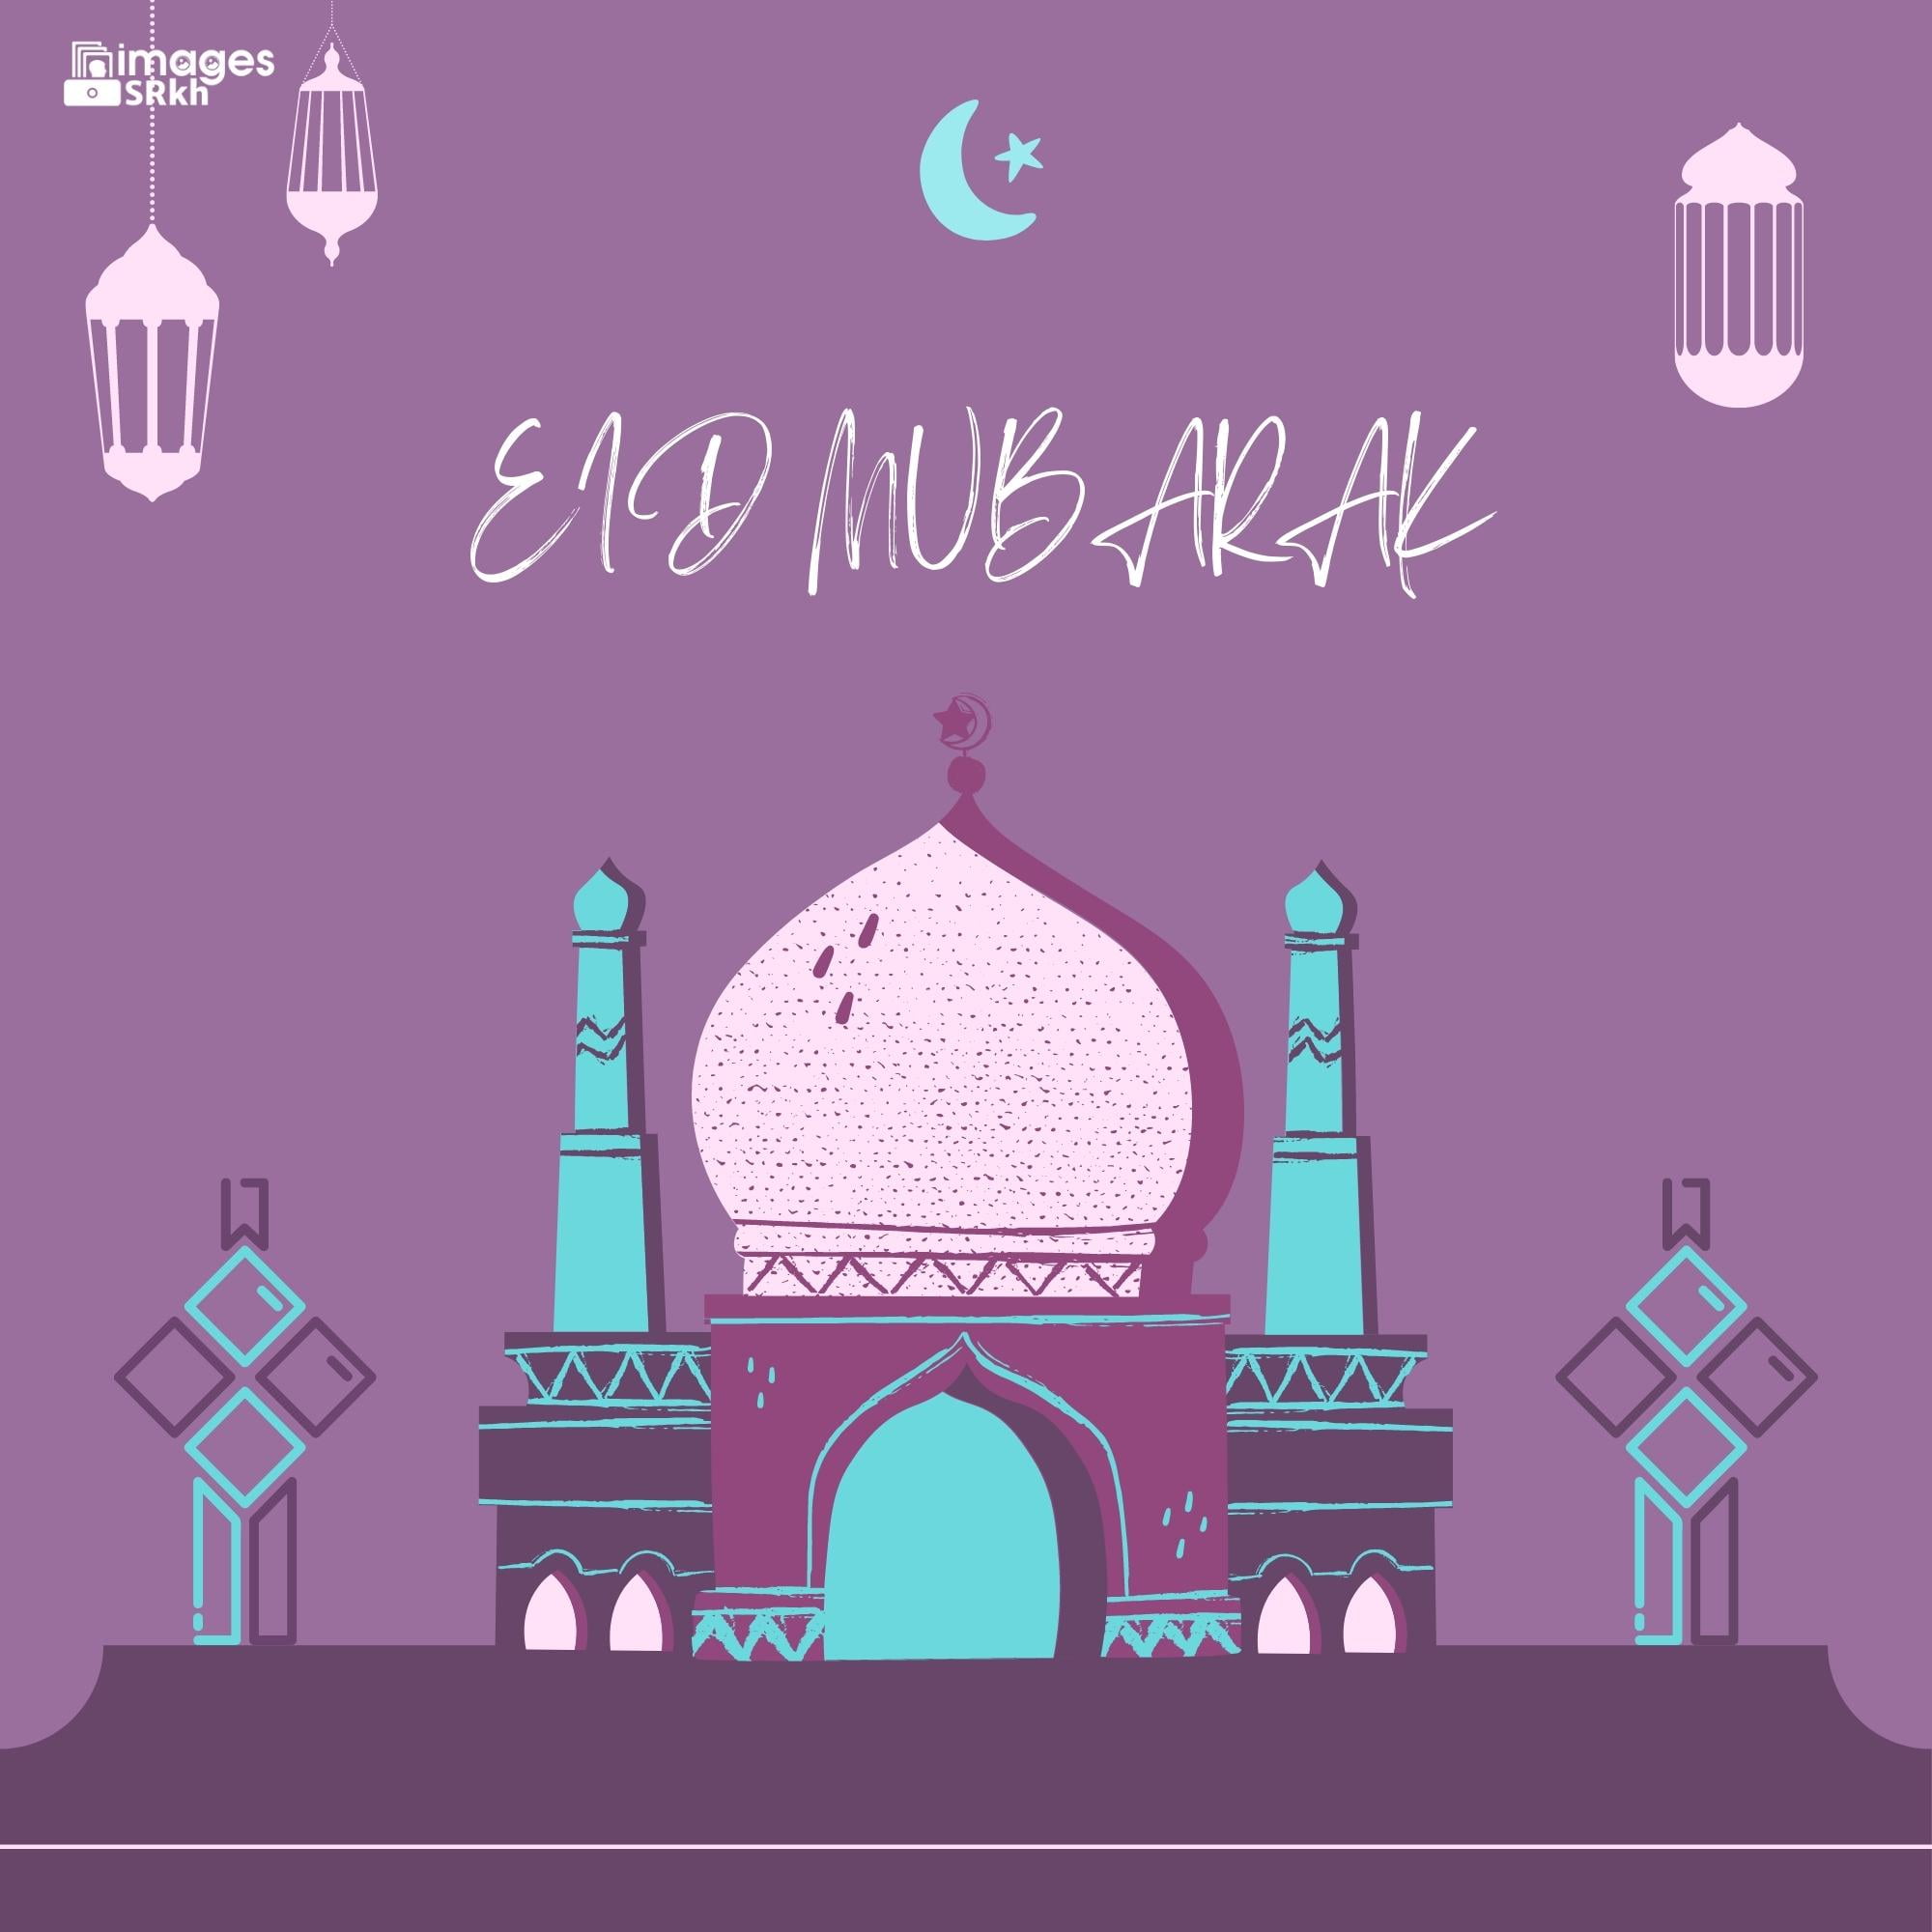 Photo Eid Mubarak (2) | Download free in Hd Quality | imagesSRkh